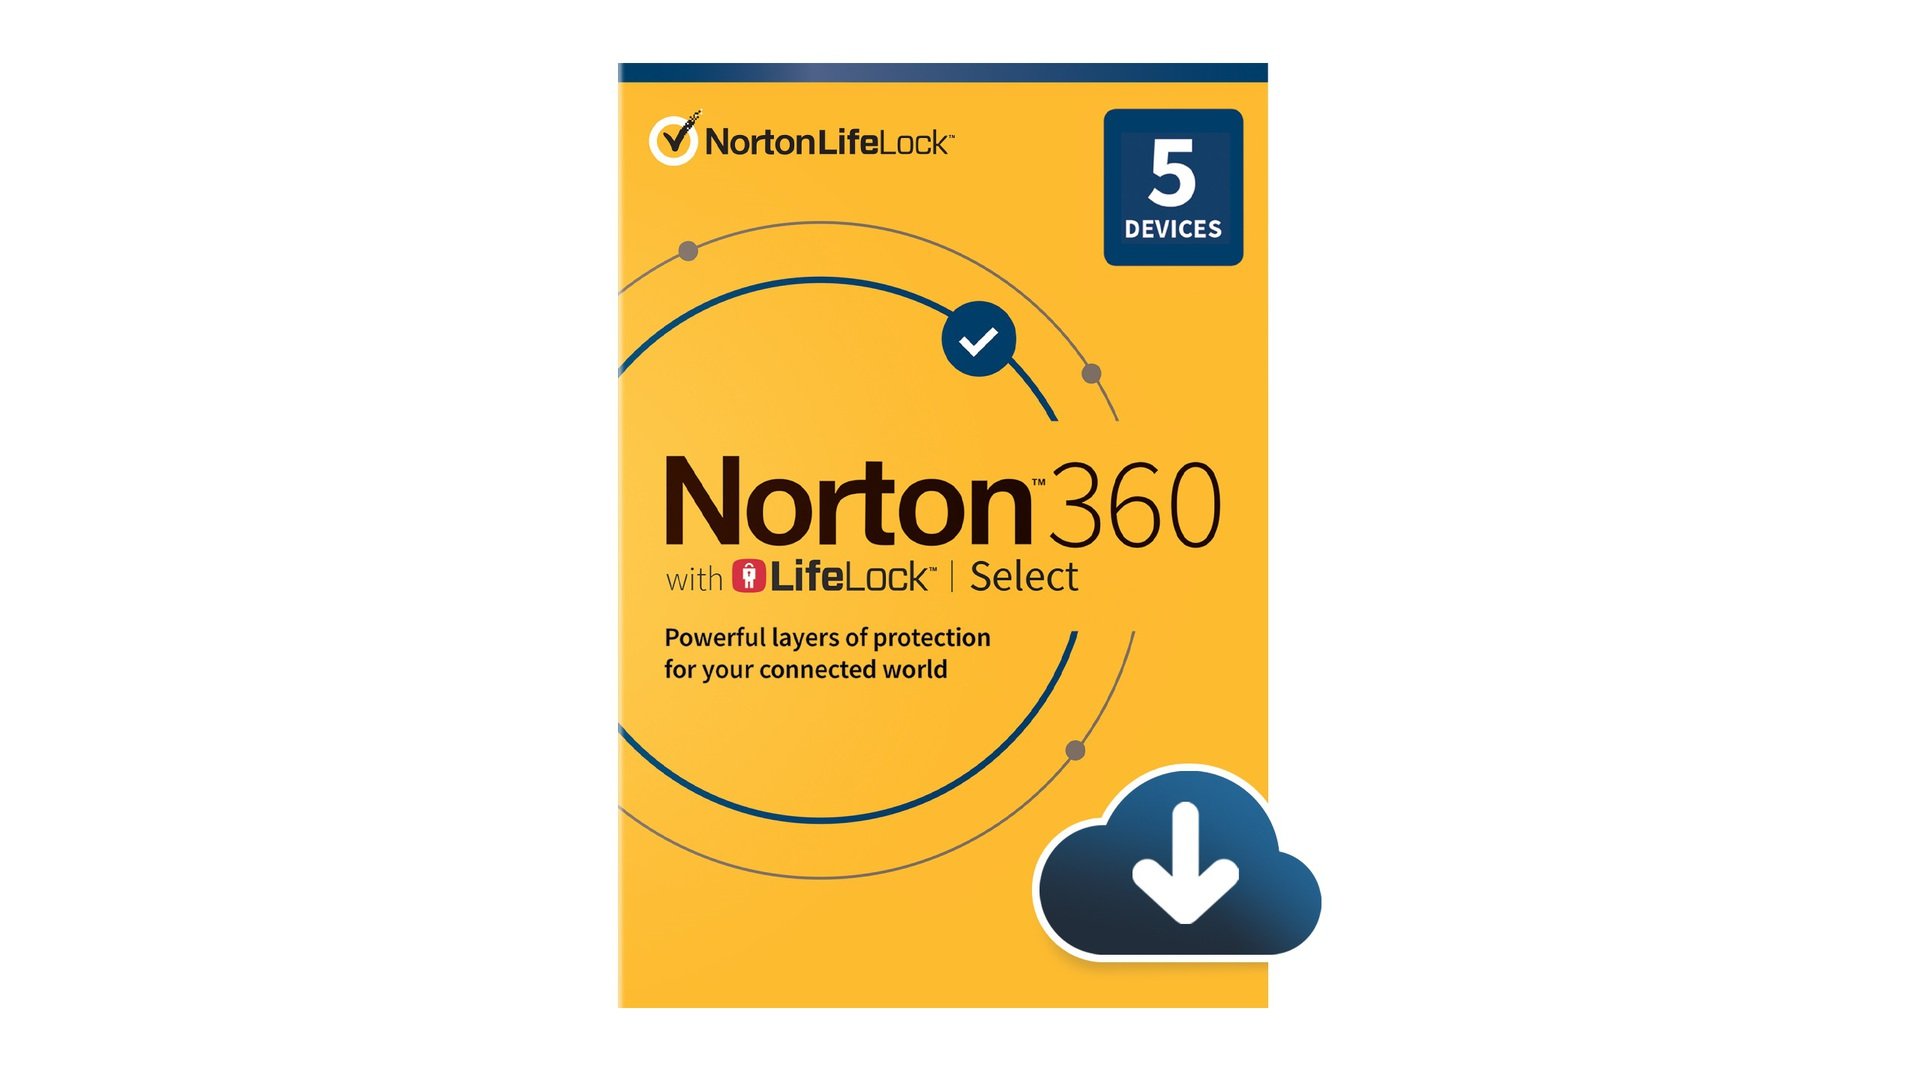 Norton 360 with LifeLock Select